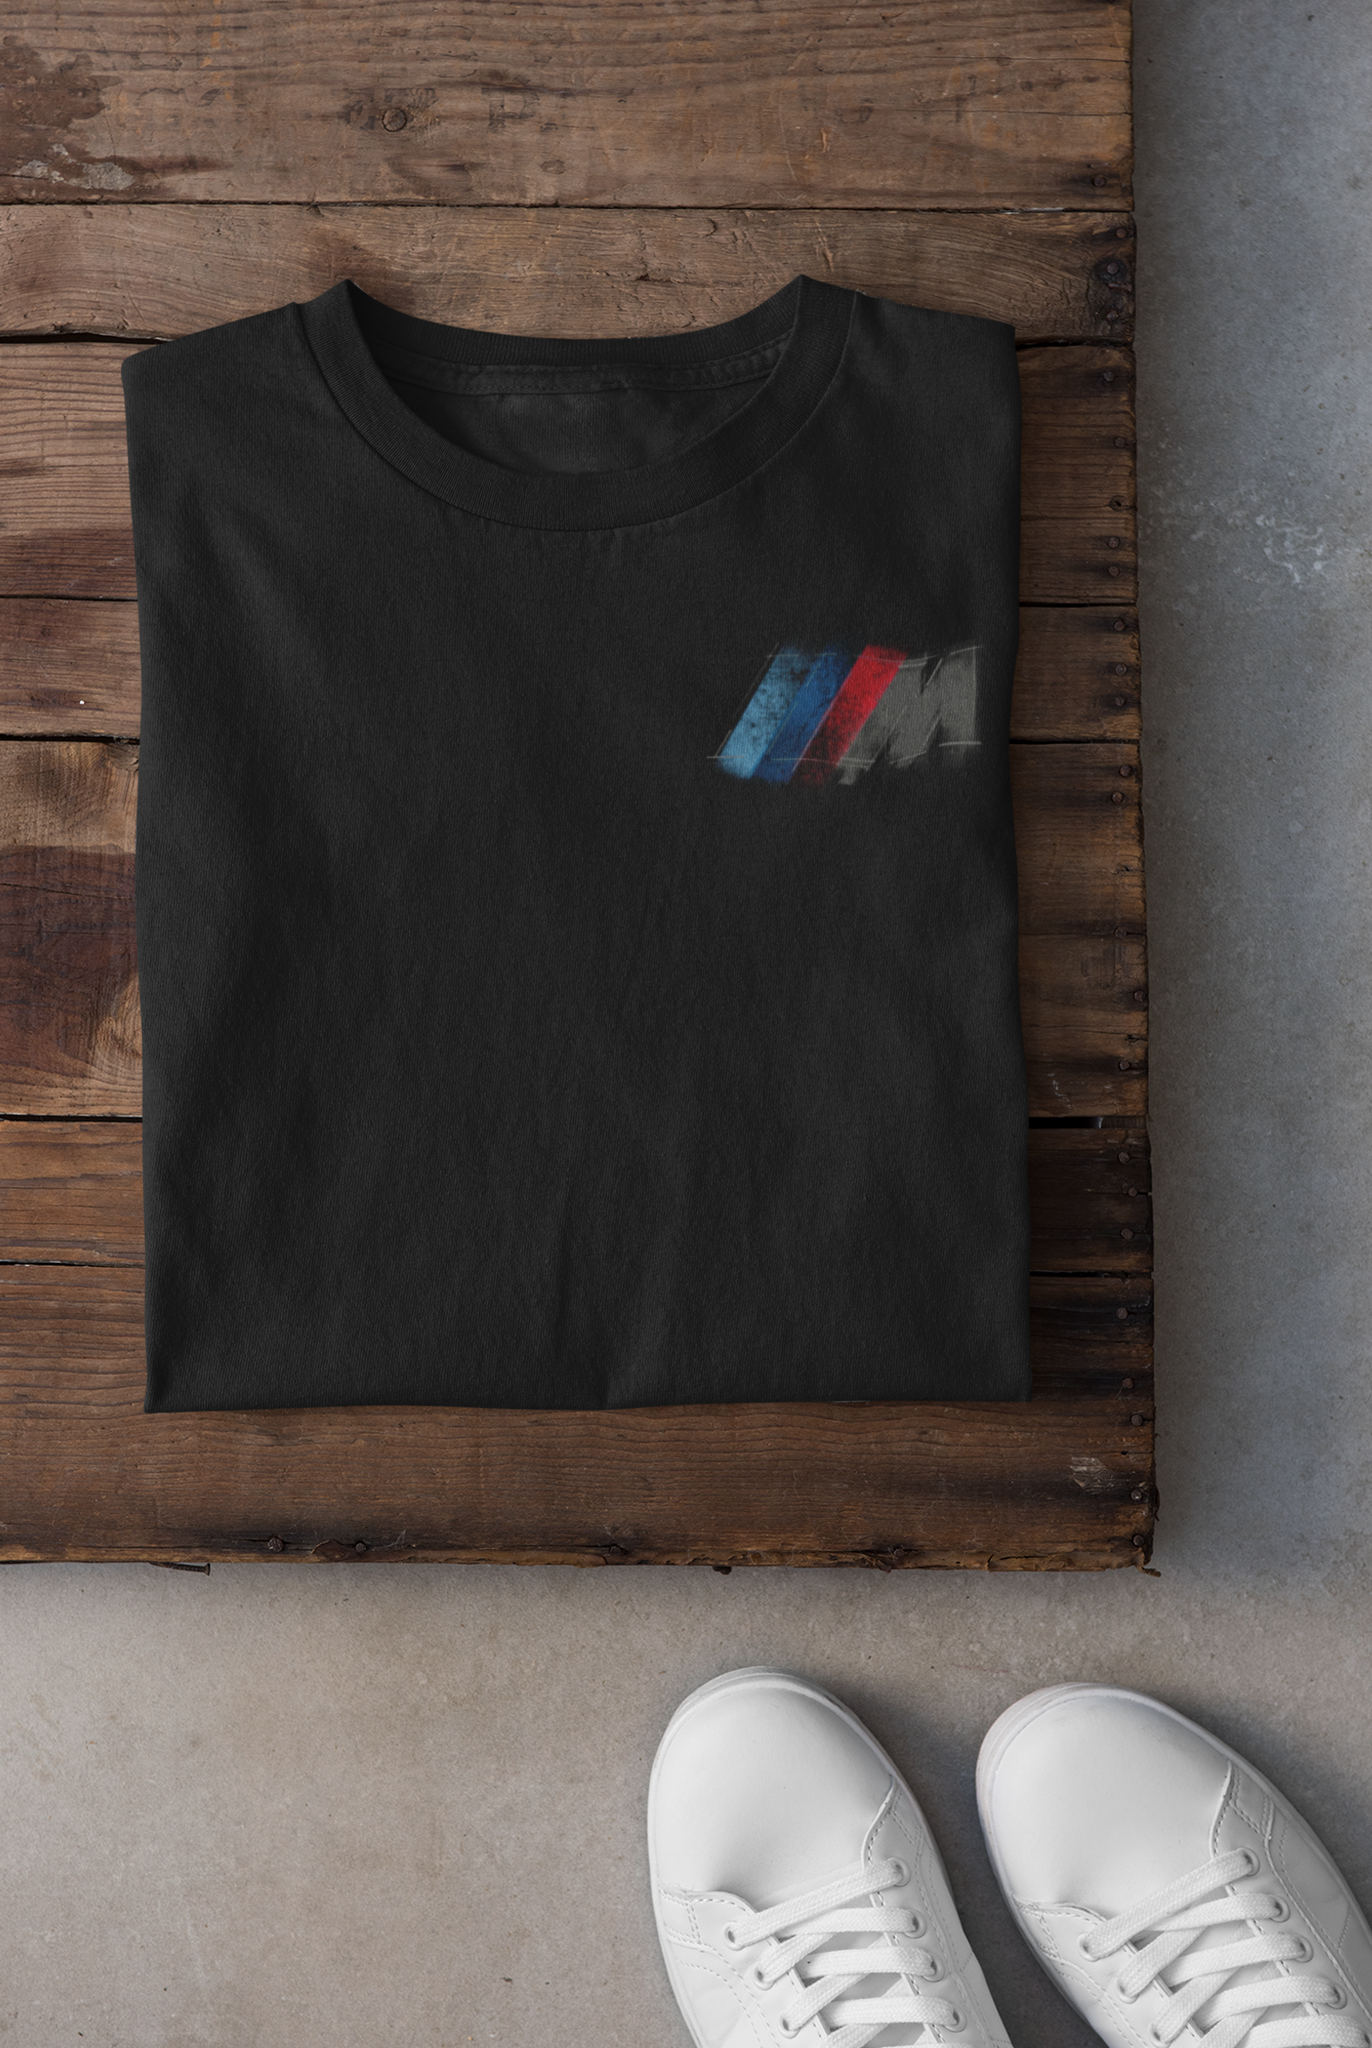 BMW 1M | T-shirt